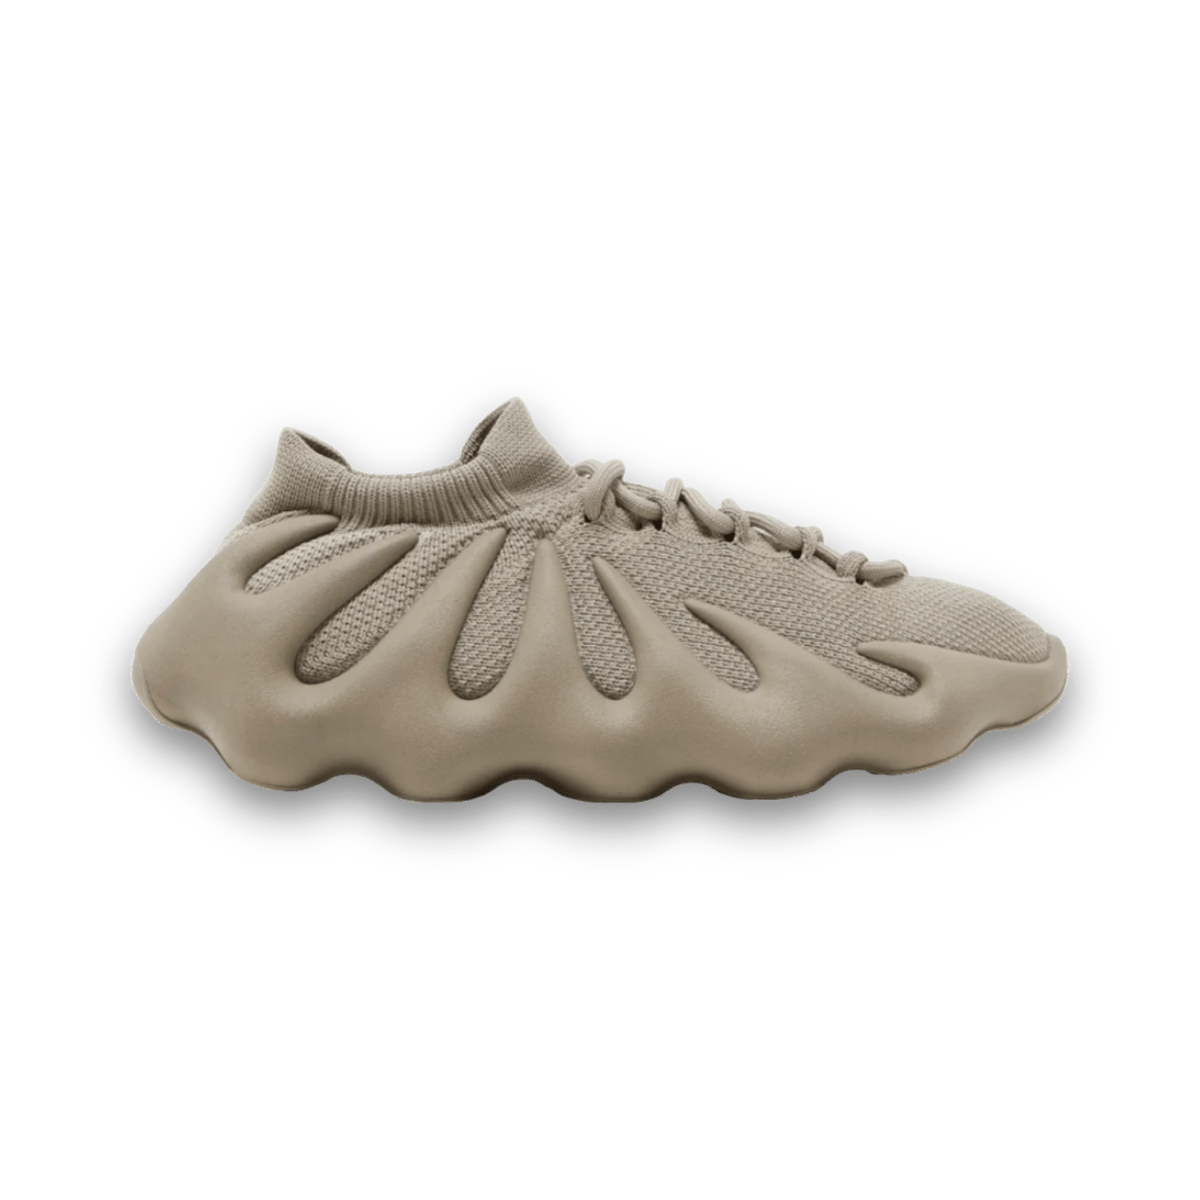 Yeezy 450 'Stone Flax' - Low Sneaker - Yeezy - Jawns on Fire